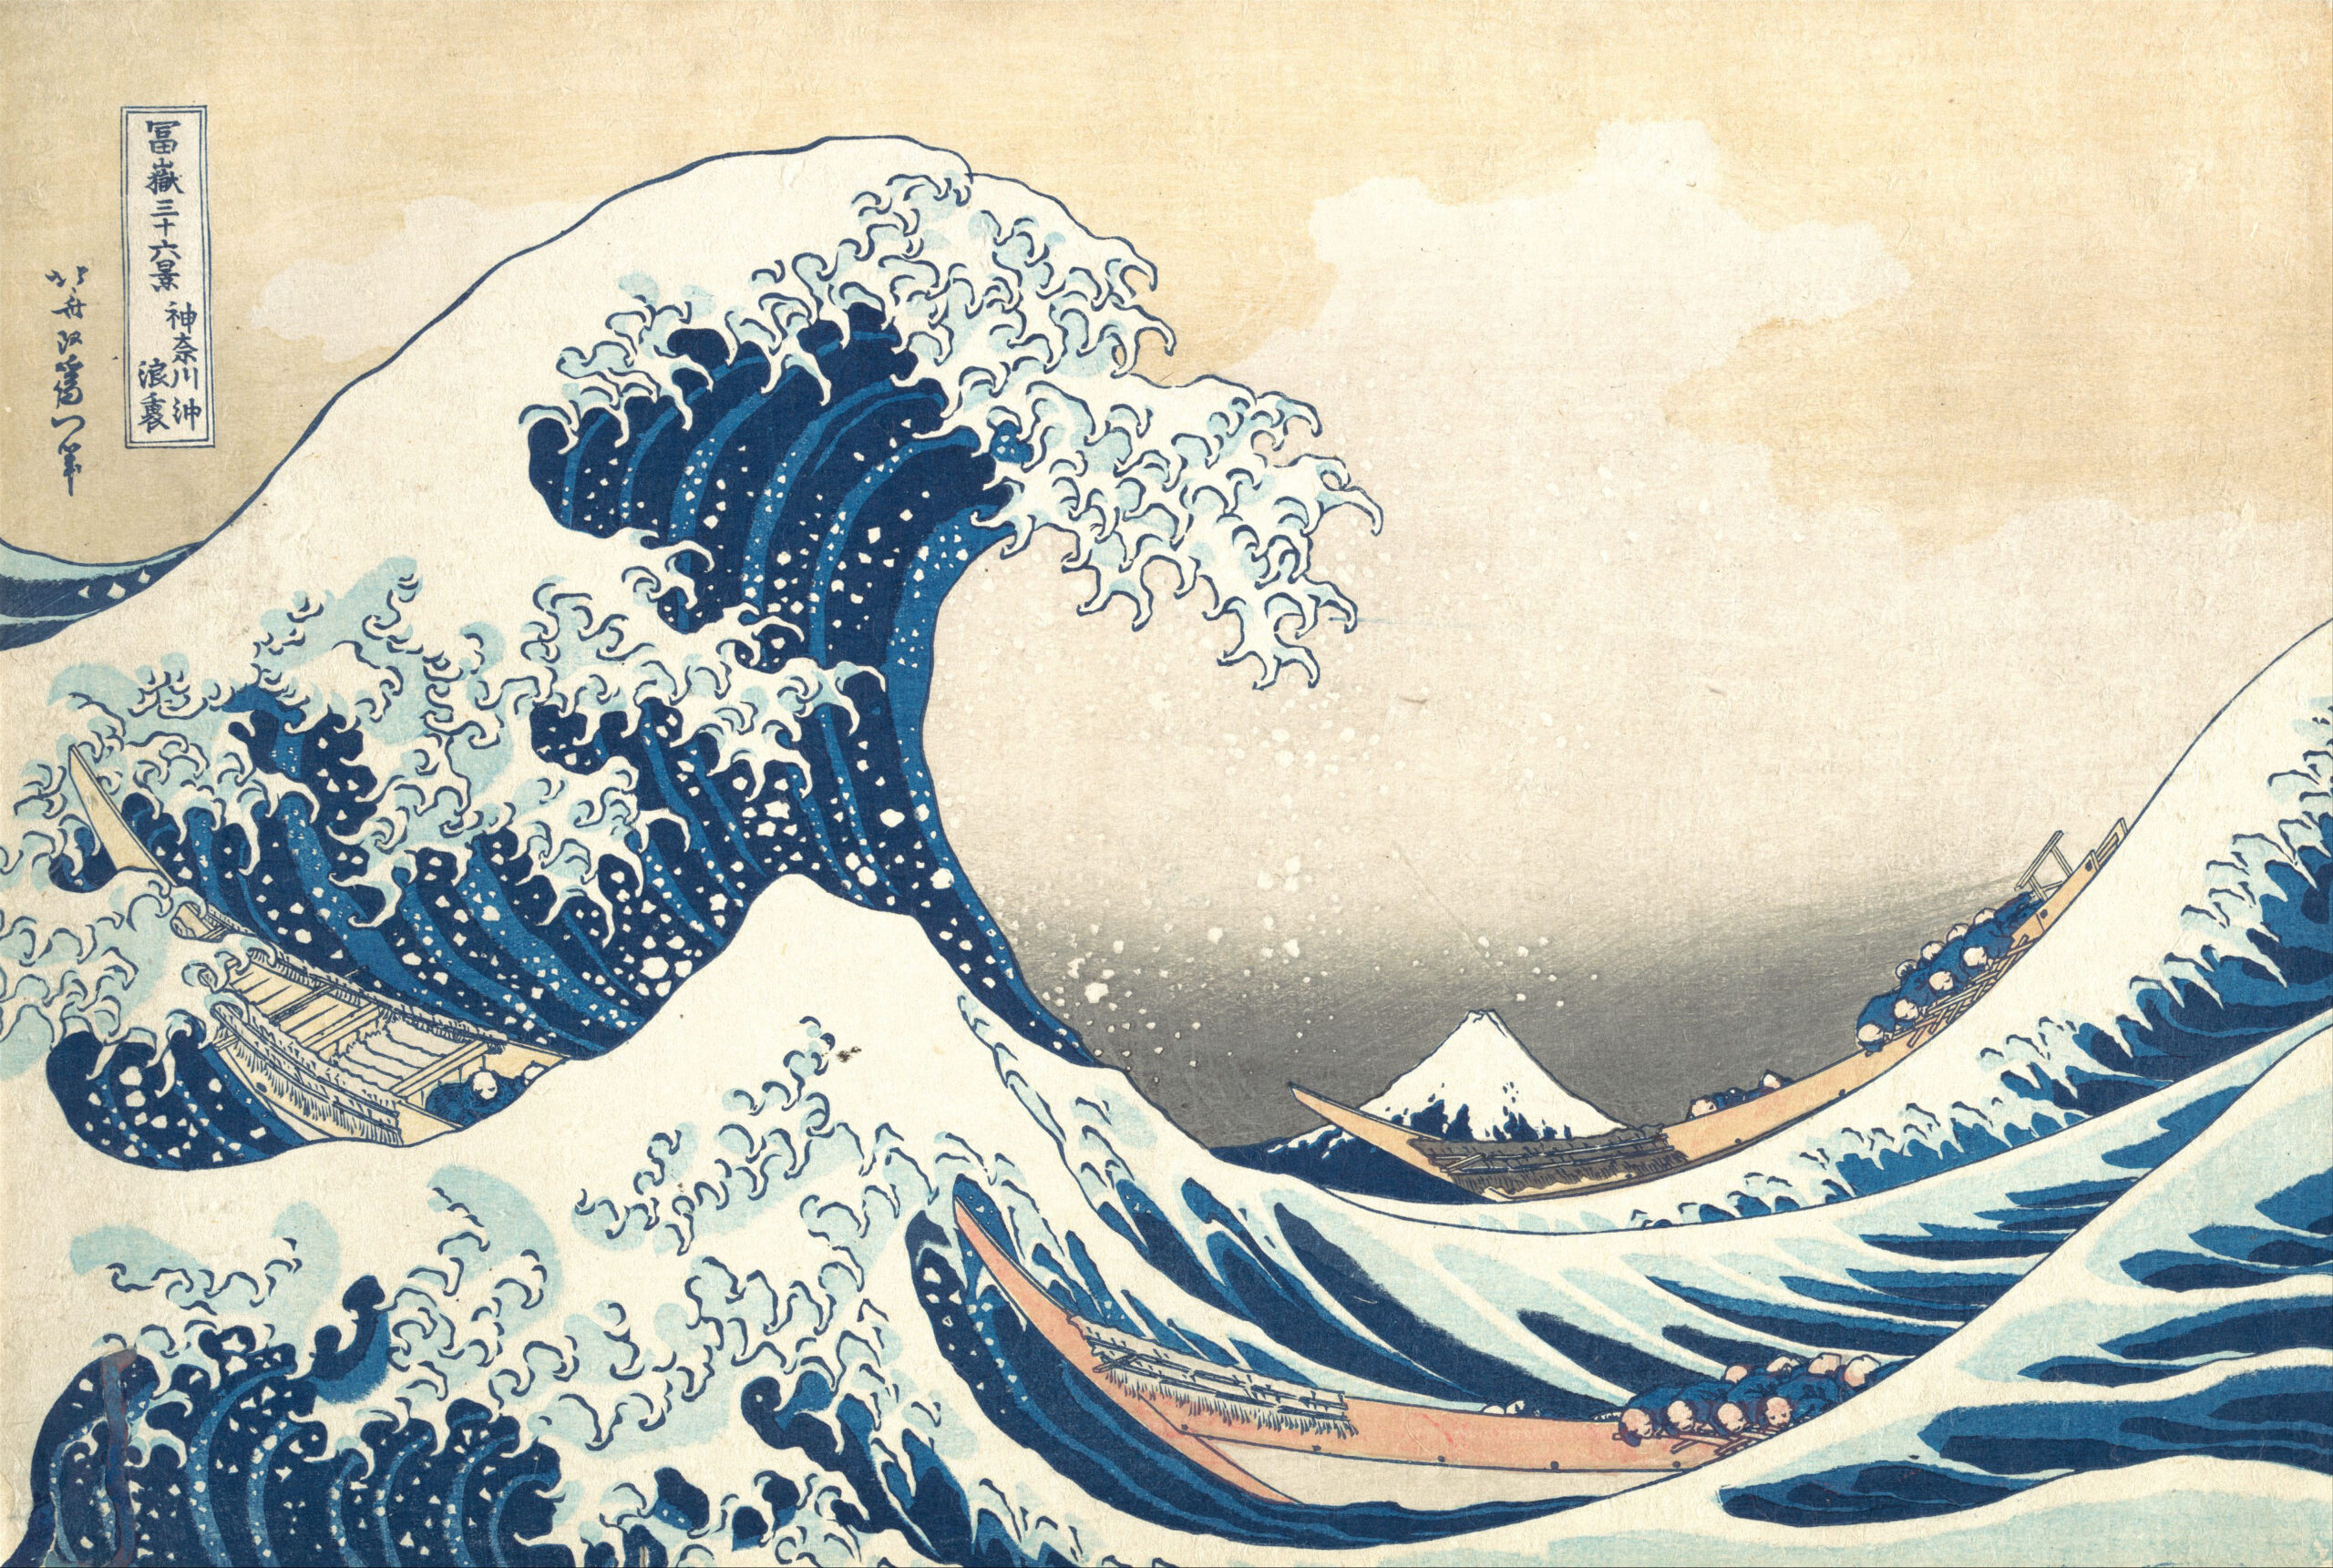 Casa Garden apresenta xilogravuras do artista japonês Katsushika Hokusai